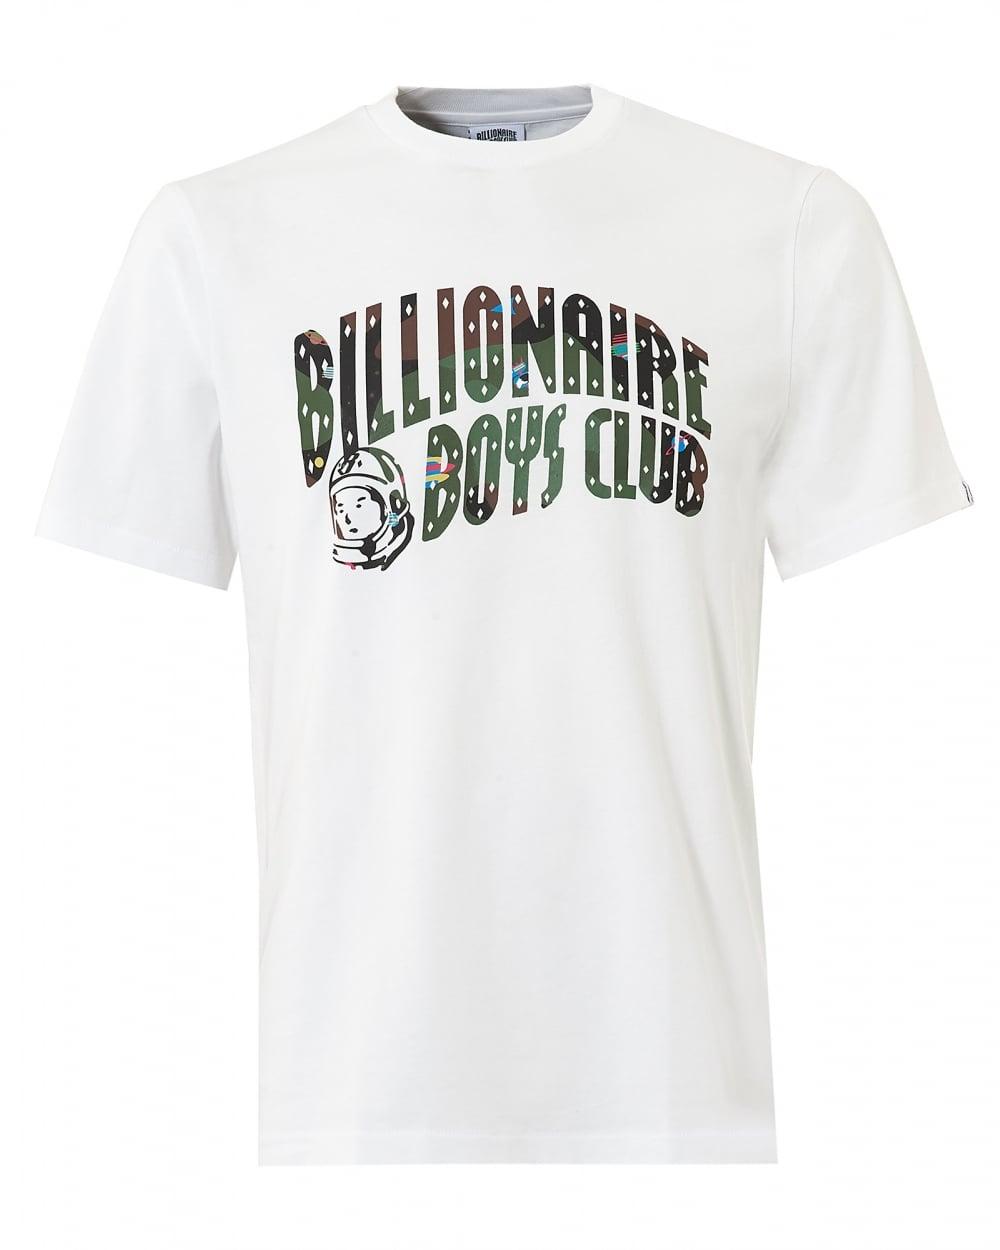 Billonaire Boys Club Logo - Billionaire Boys Club Mens Camo Logo T-Shirt, Short Sleeve White Tee